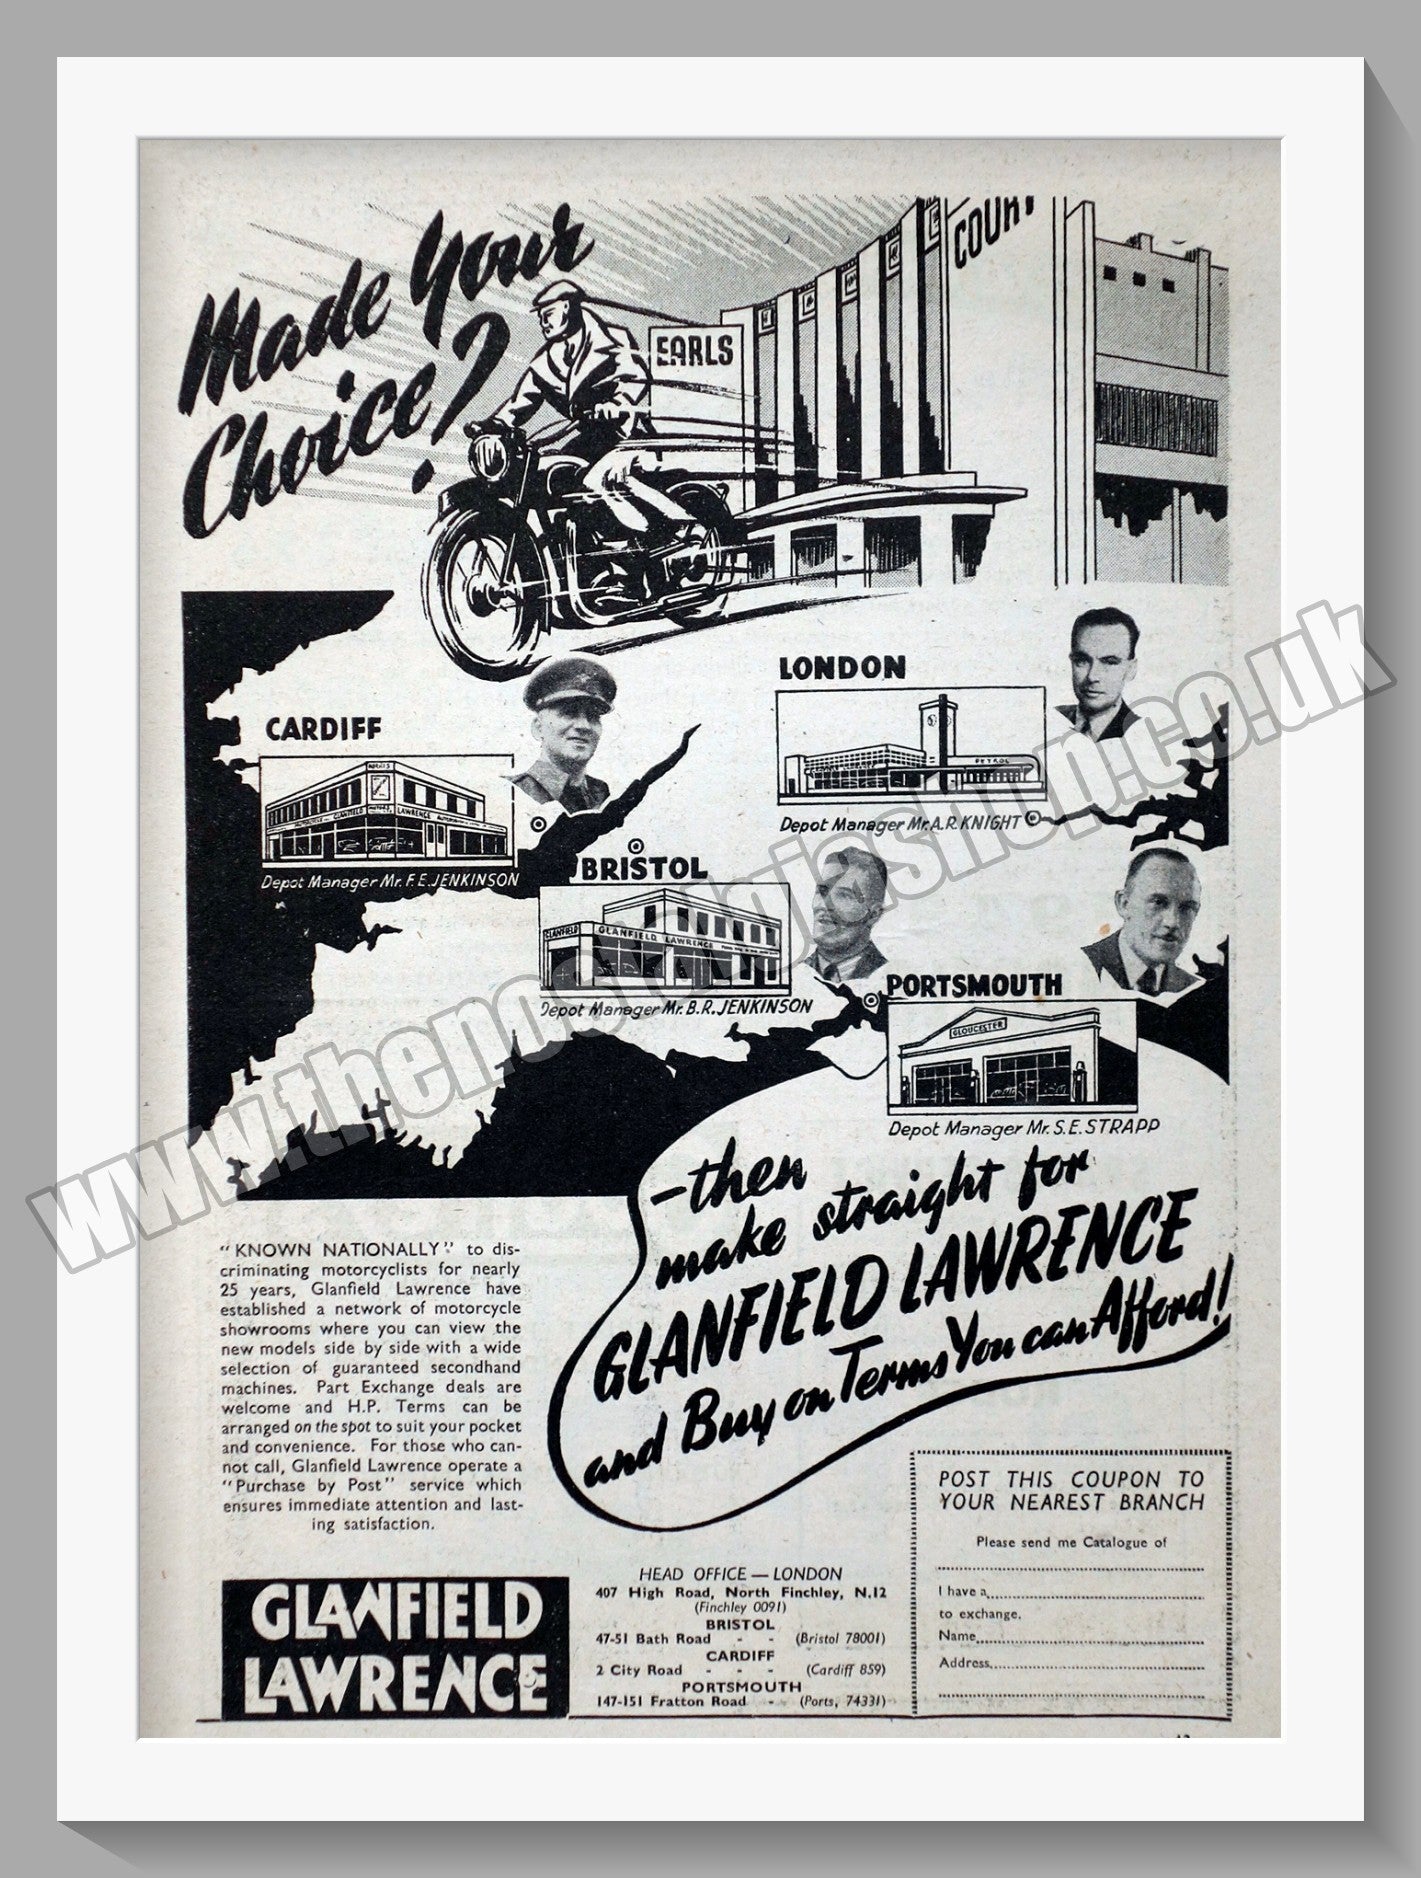 Glanfield Lawrence Motorcycle Dealer. Original Advert 1948 (ref AD57437)